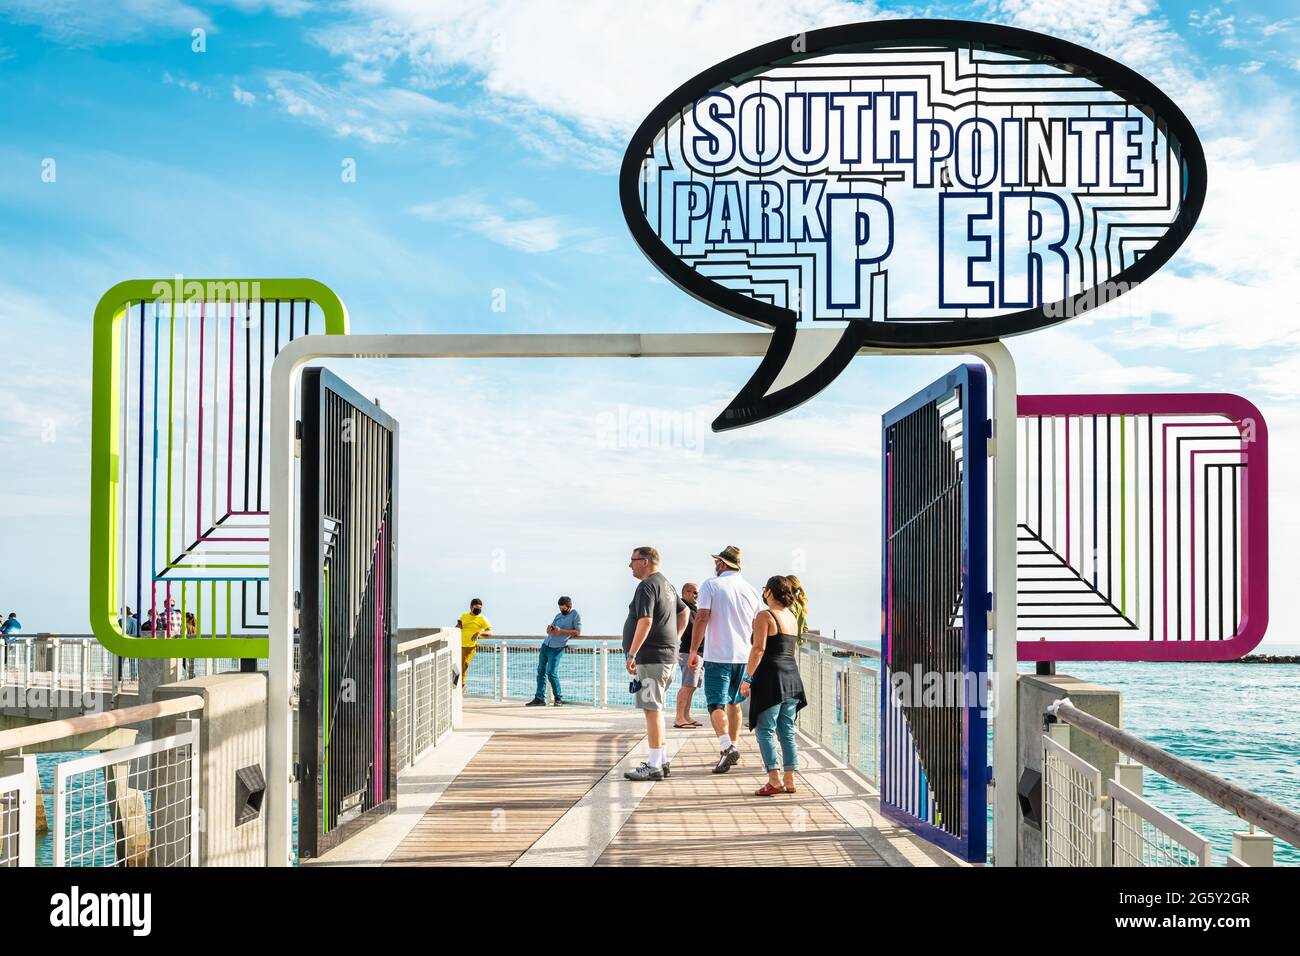 Miami Beach, USA - January 17, 2021: South beach Lummus Park promenade and sign entrance for south pointe park pier on south end of Miami beach Stock Photo